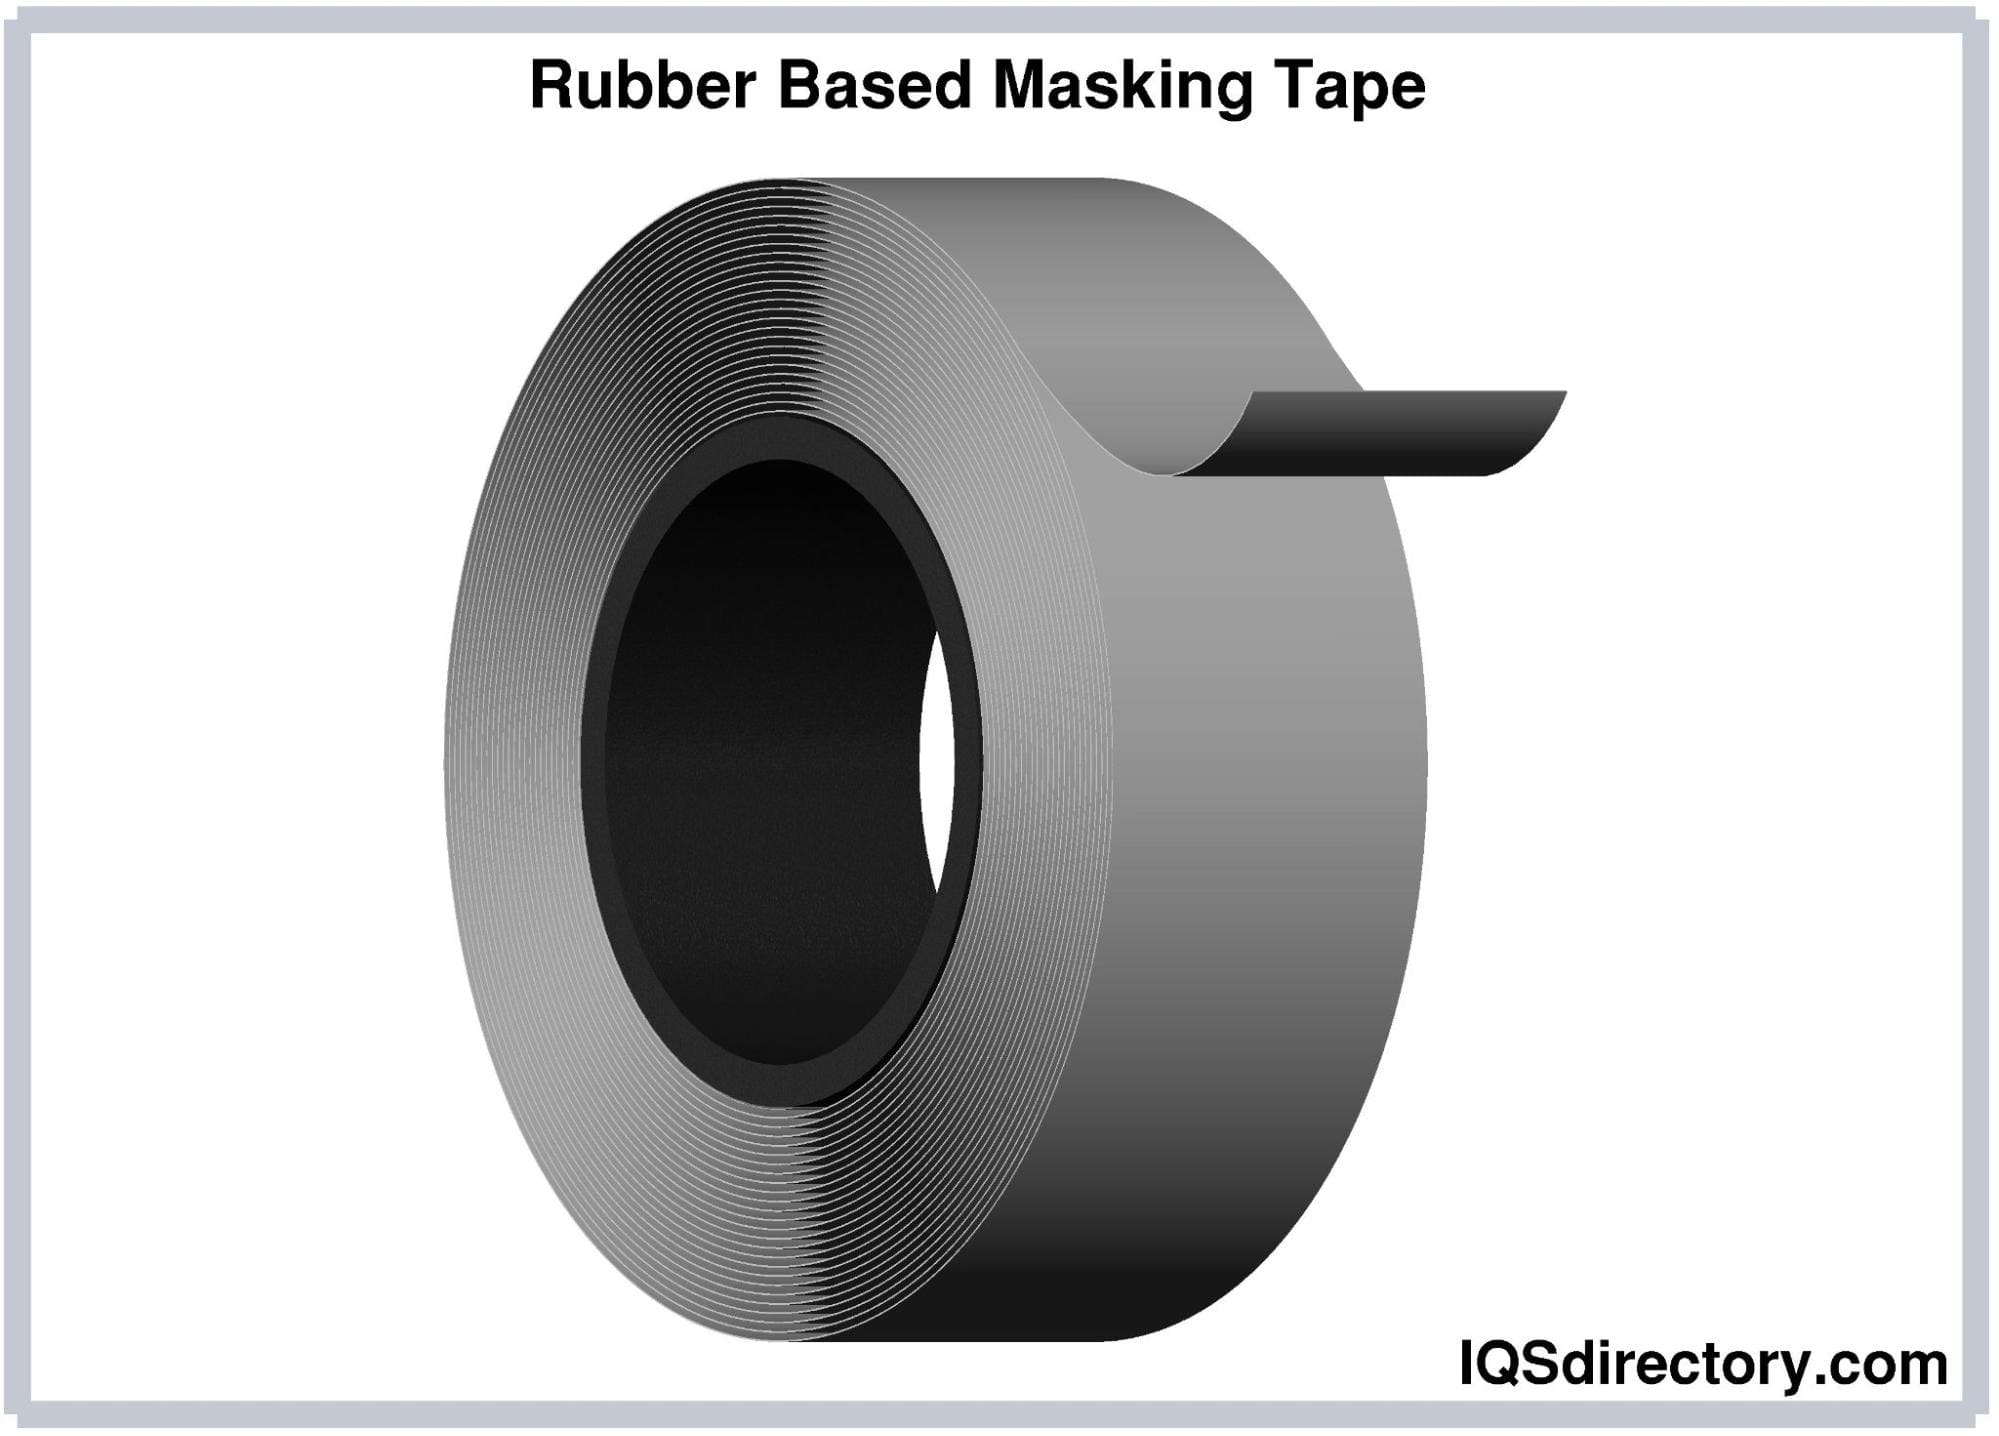 Rubber Based Masking Tape